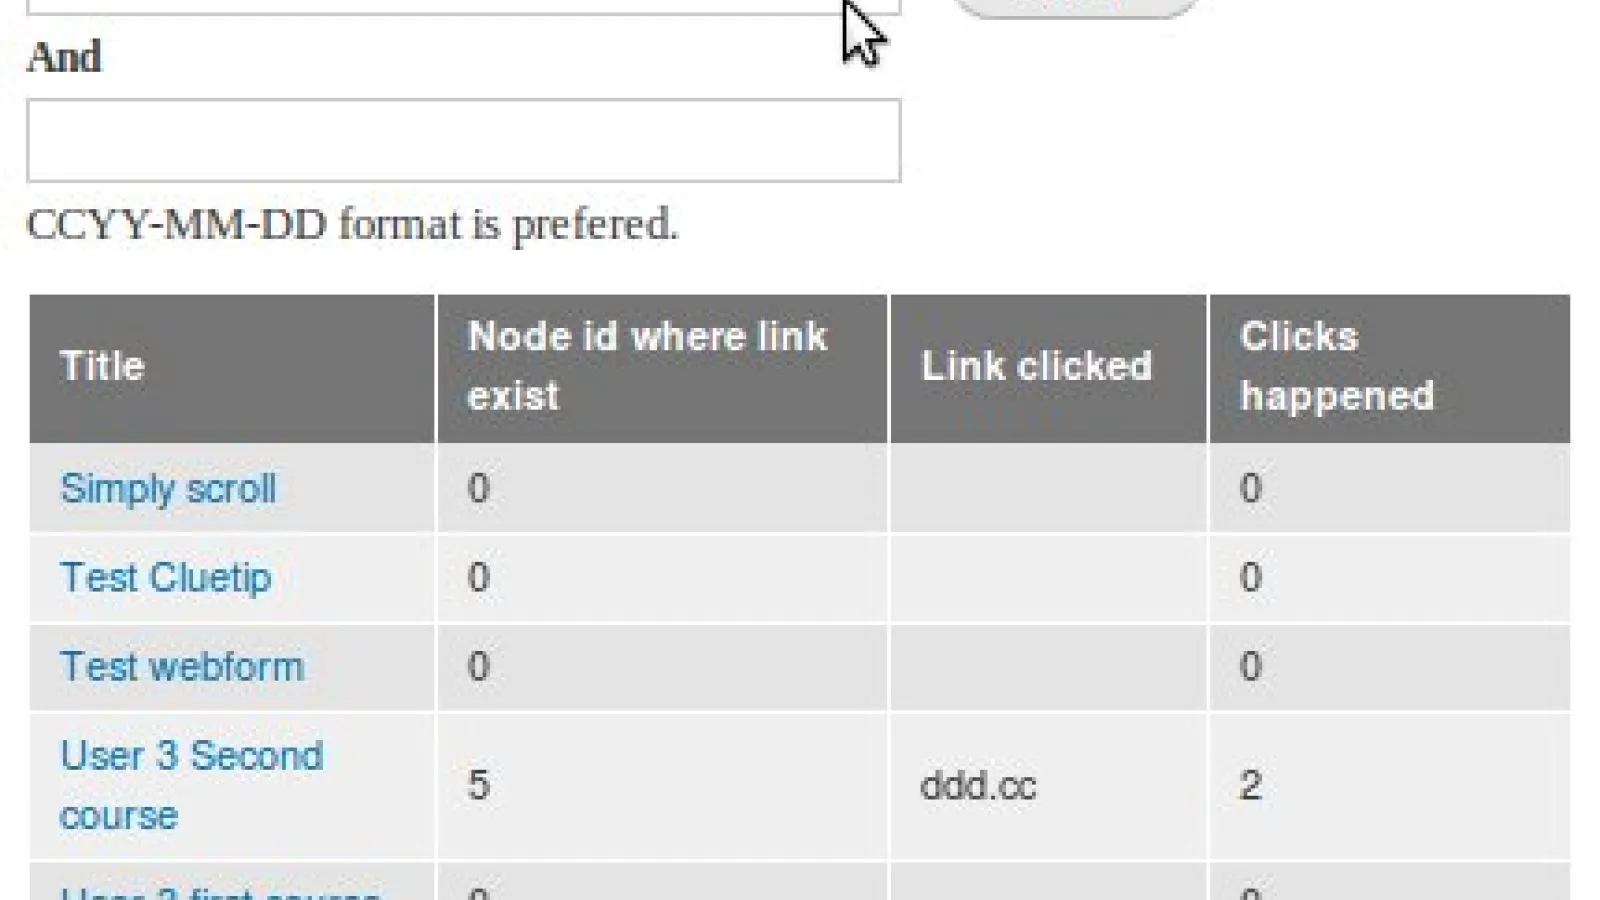 Tracking outbound website traffic on your Drupal website : Link Click Count